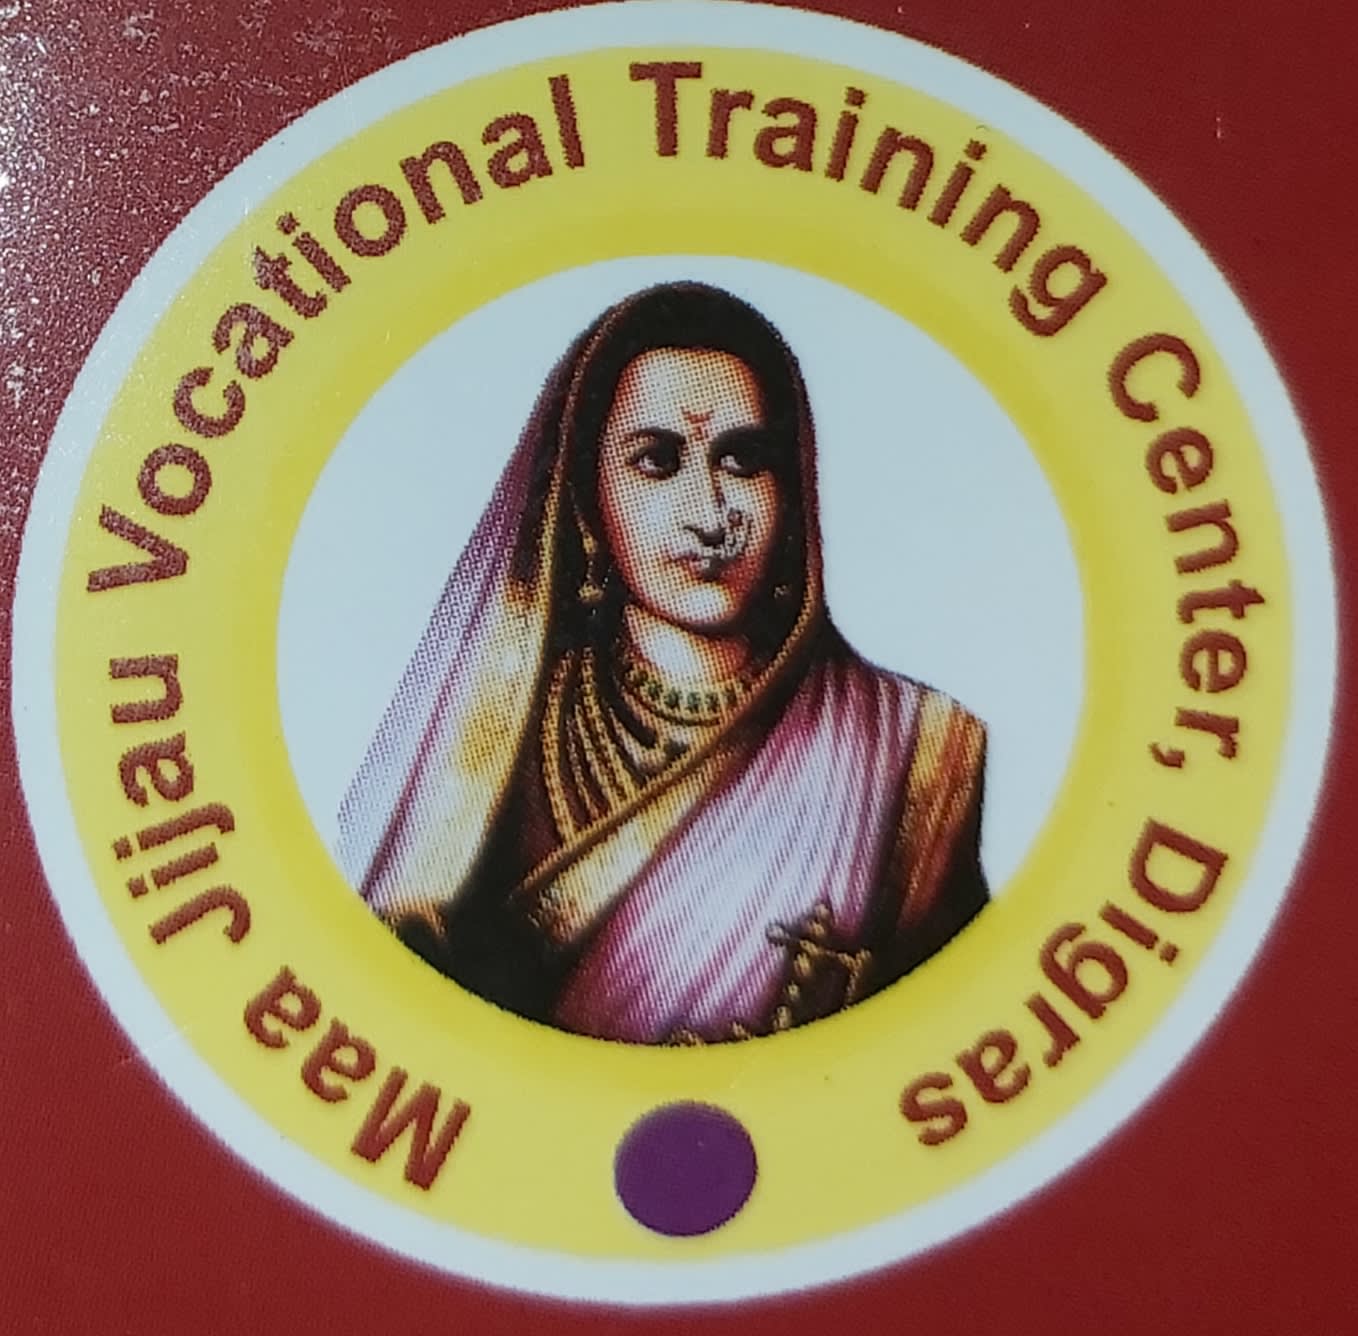 Maa Jijau Vocational Training Center